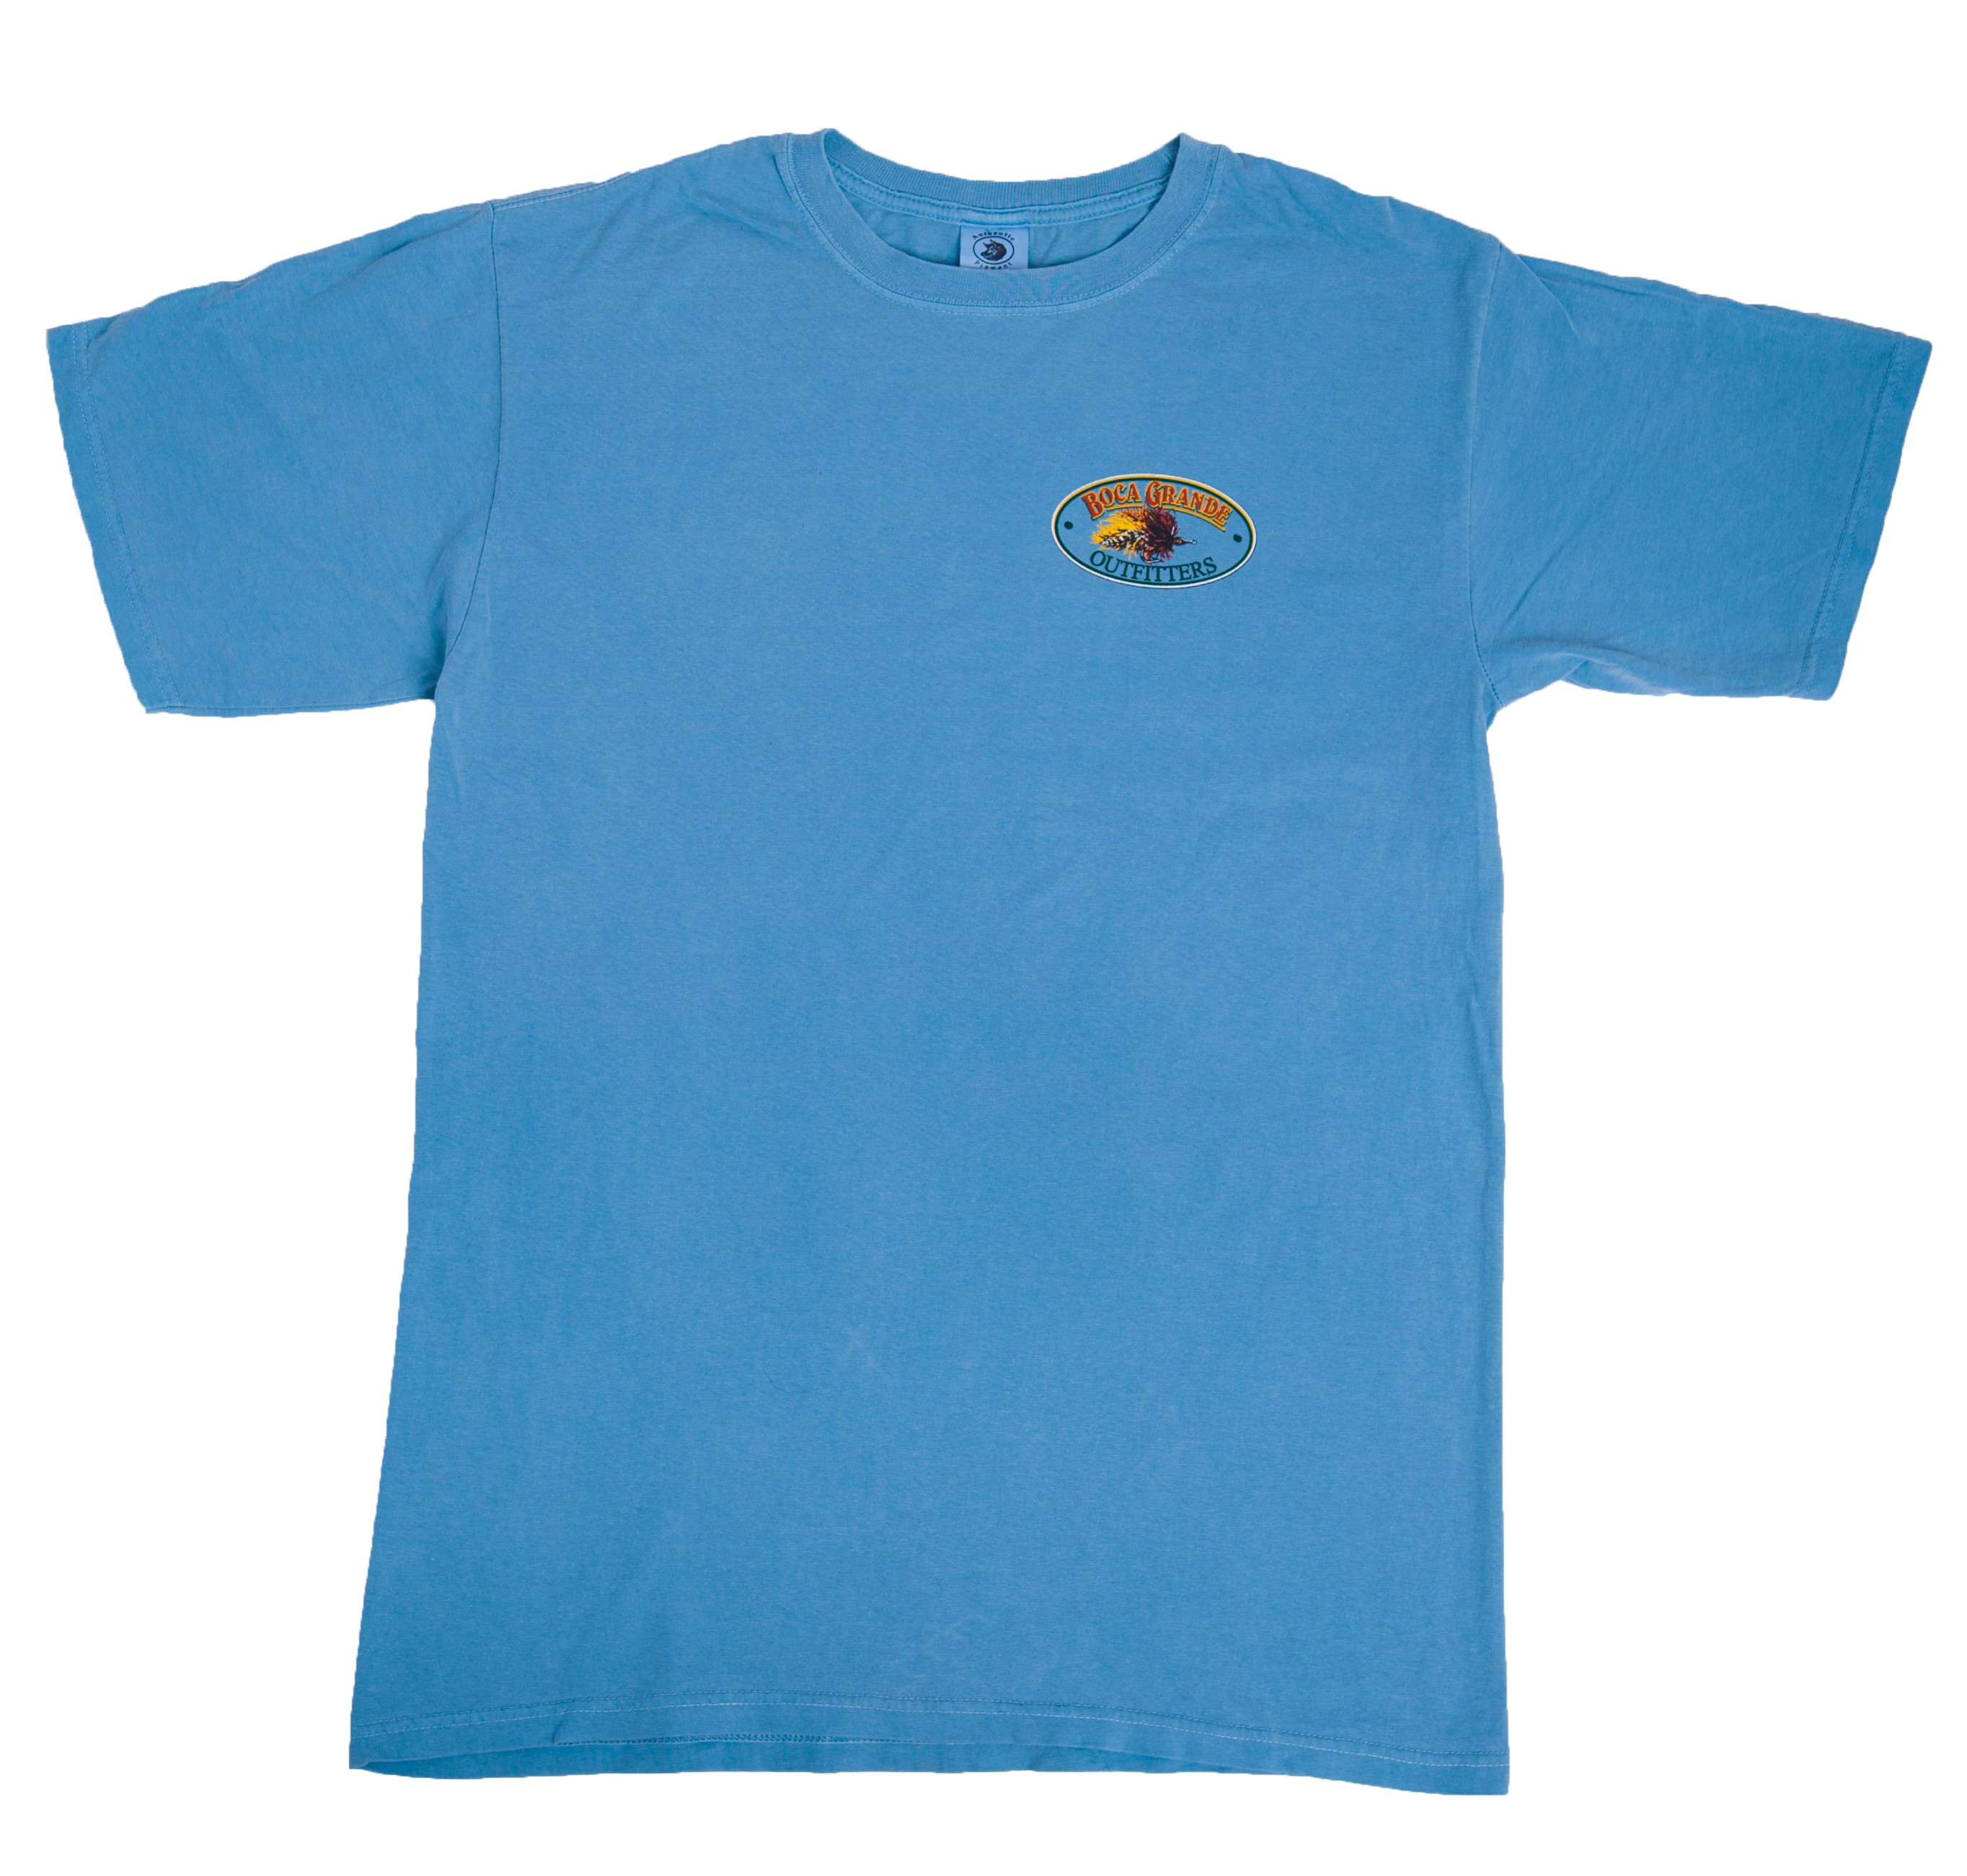 Boca Grande Outfitters Short Sleeved Fly Logo T-Shirt - Bay